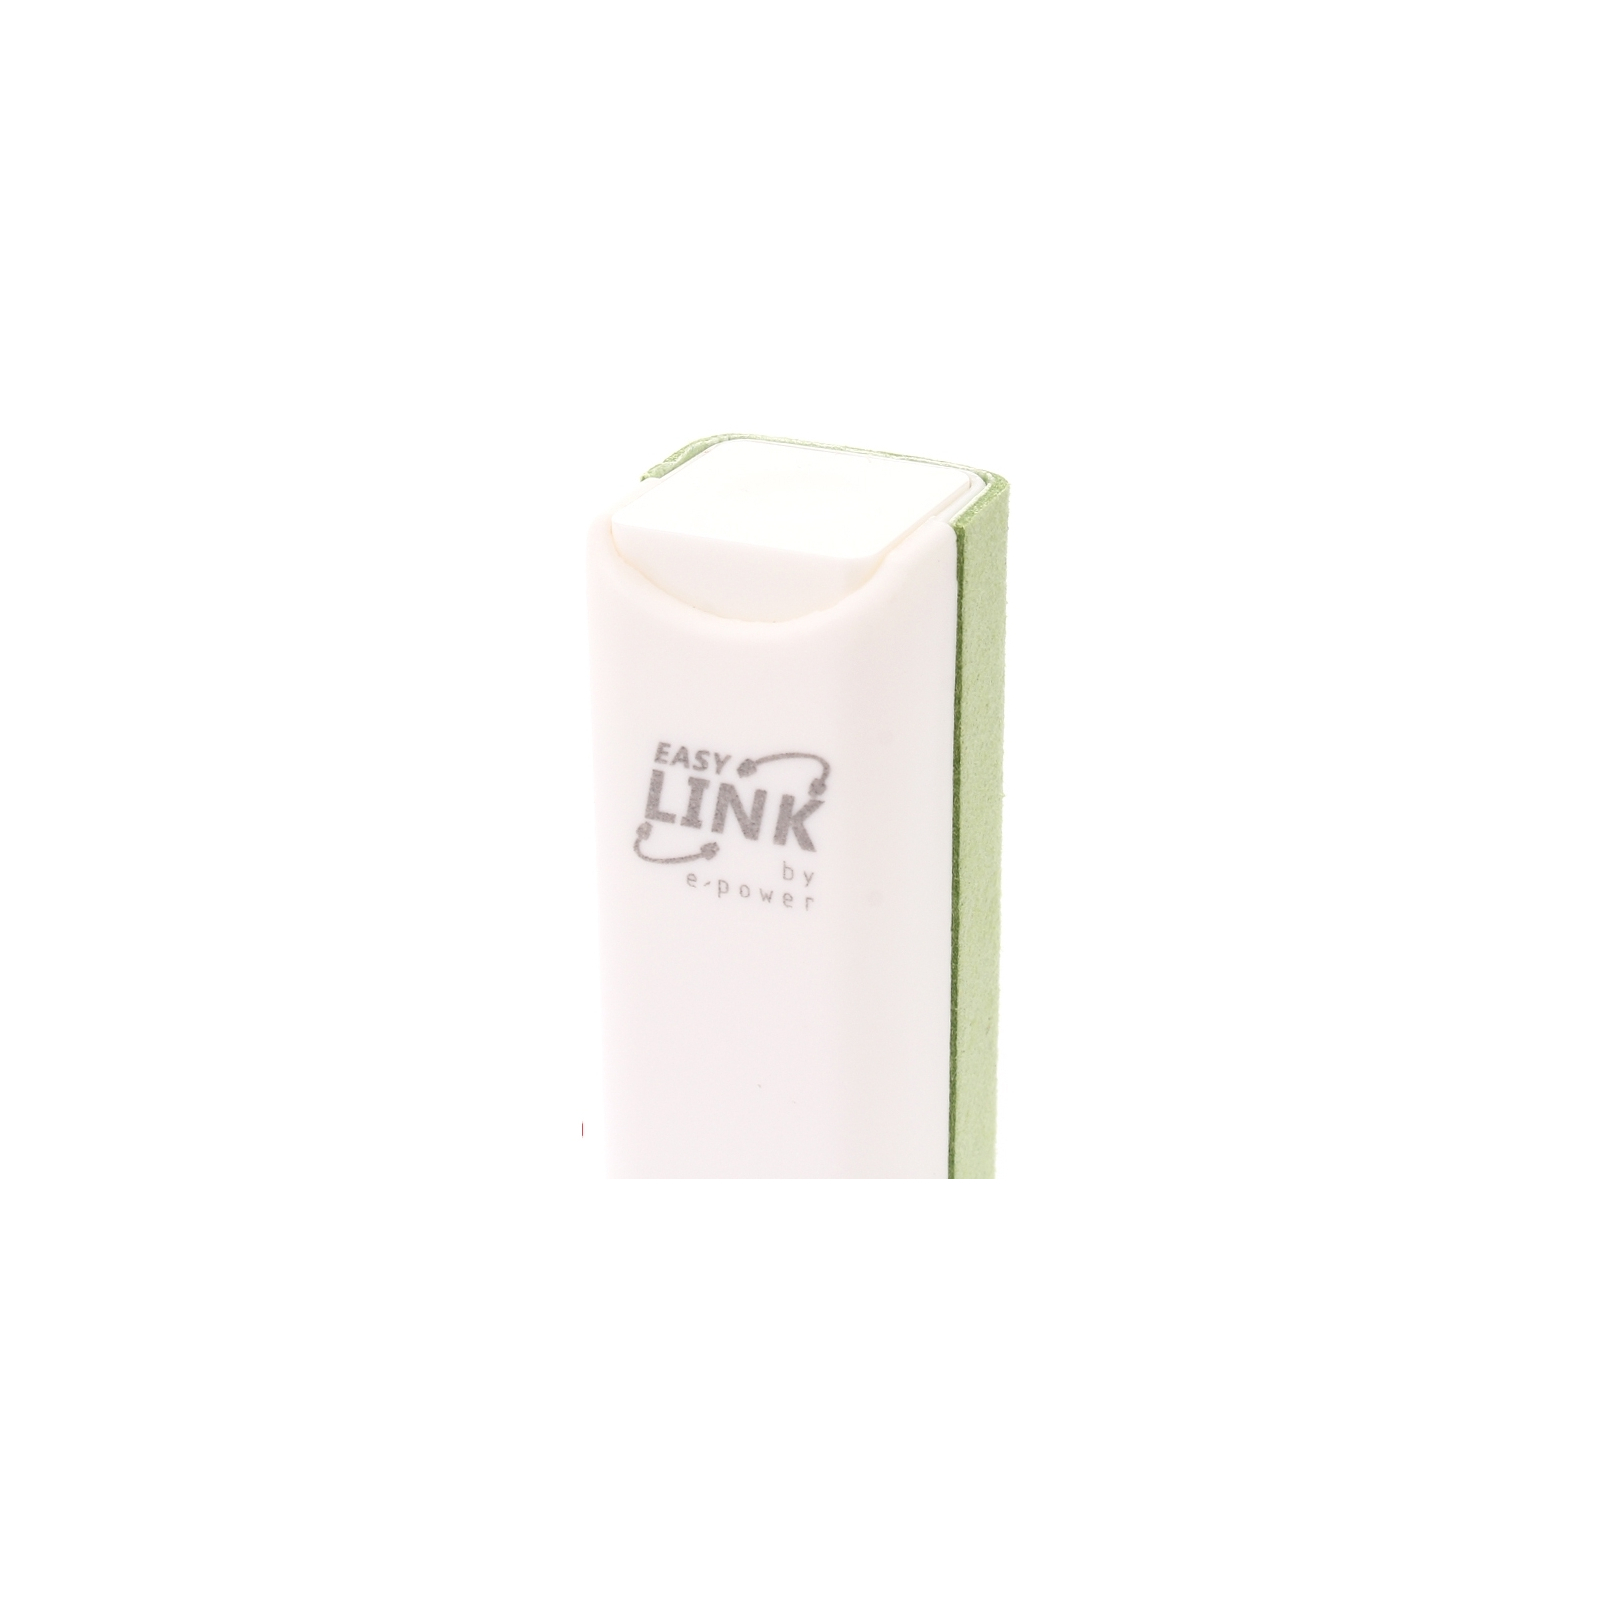 Спрей для очистки EasyLink OA-300 White Green (OA-300 WG) изображение 4